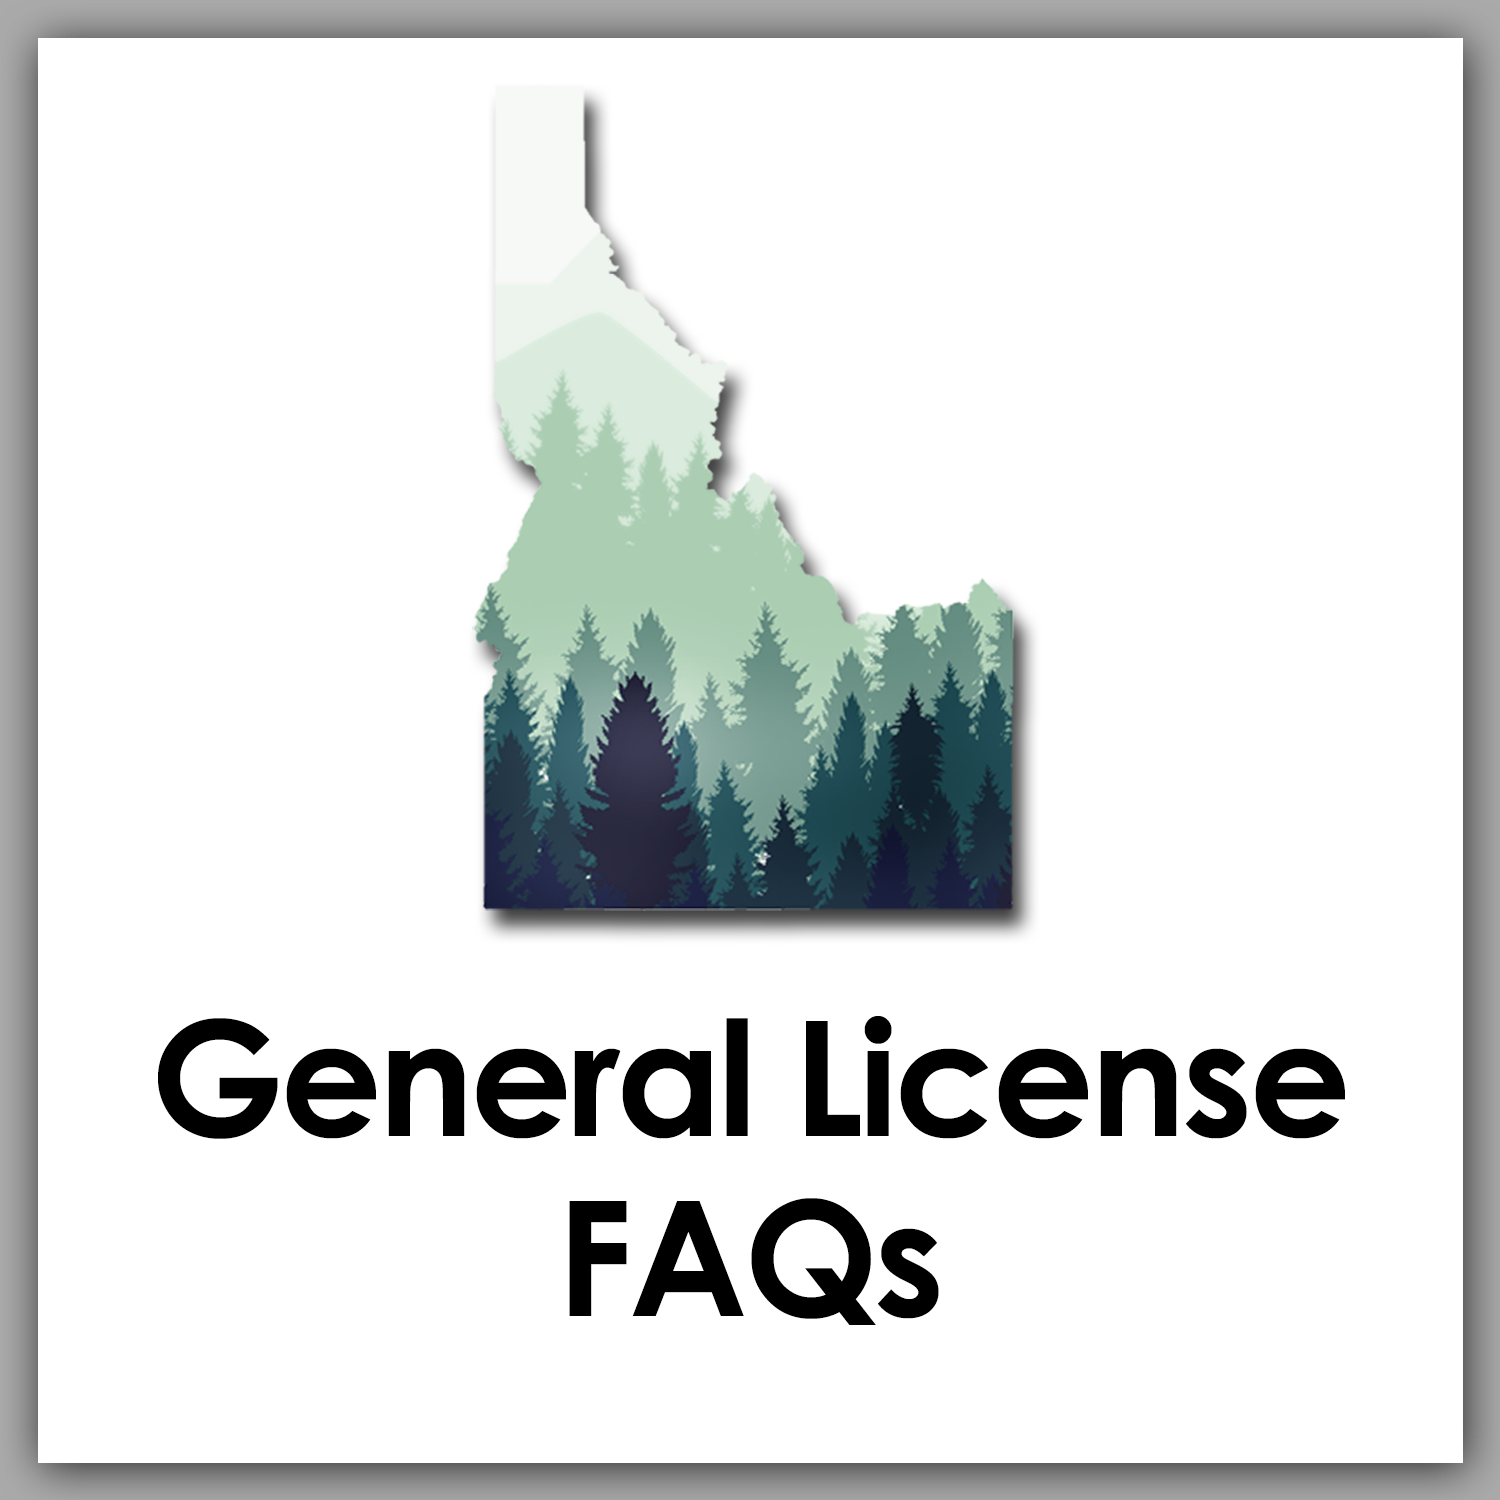 General License FAQs